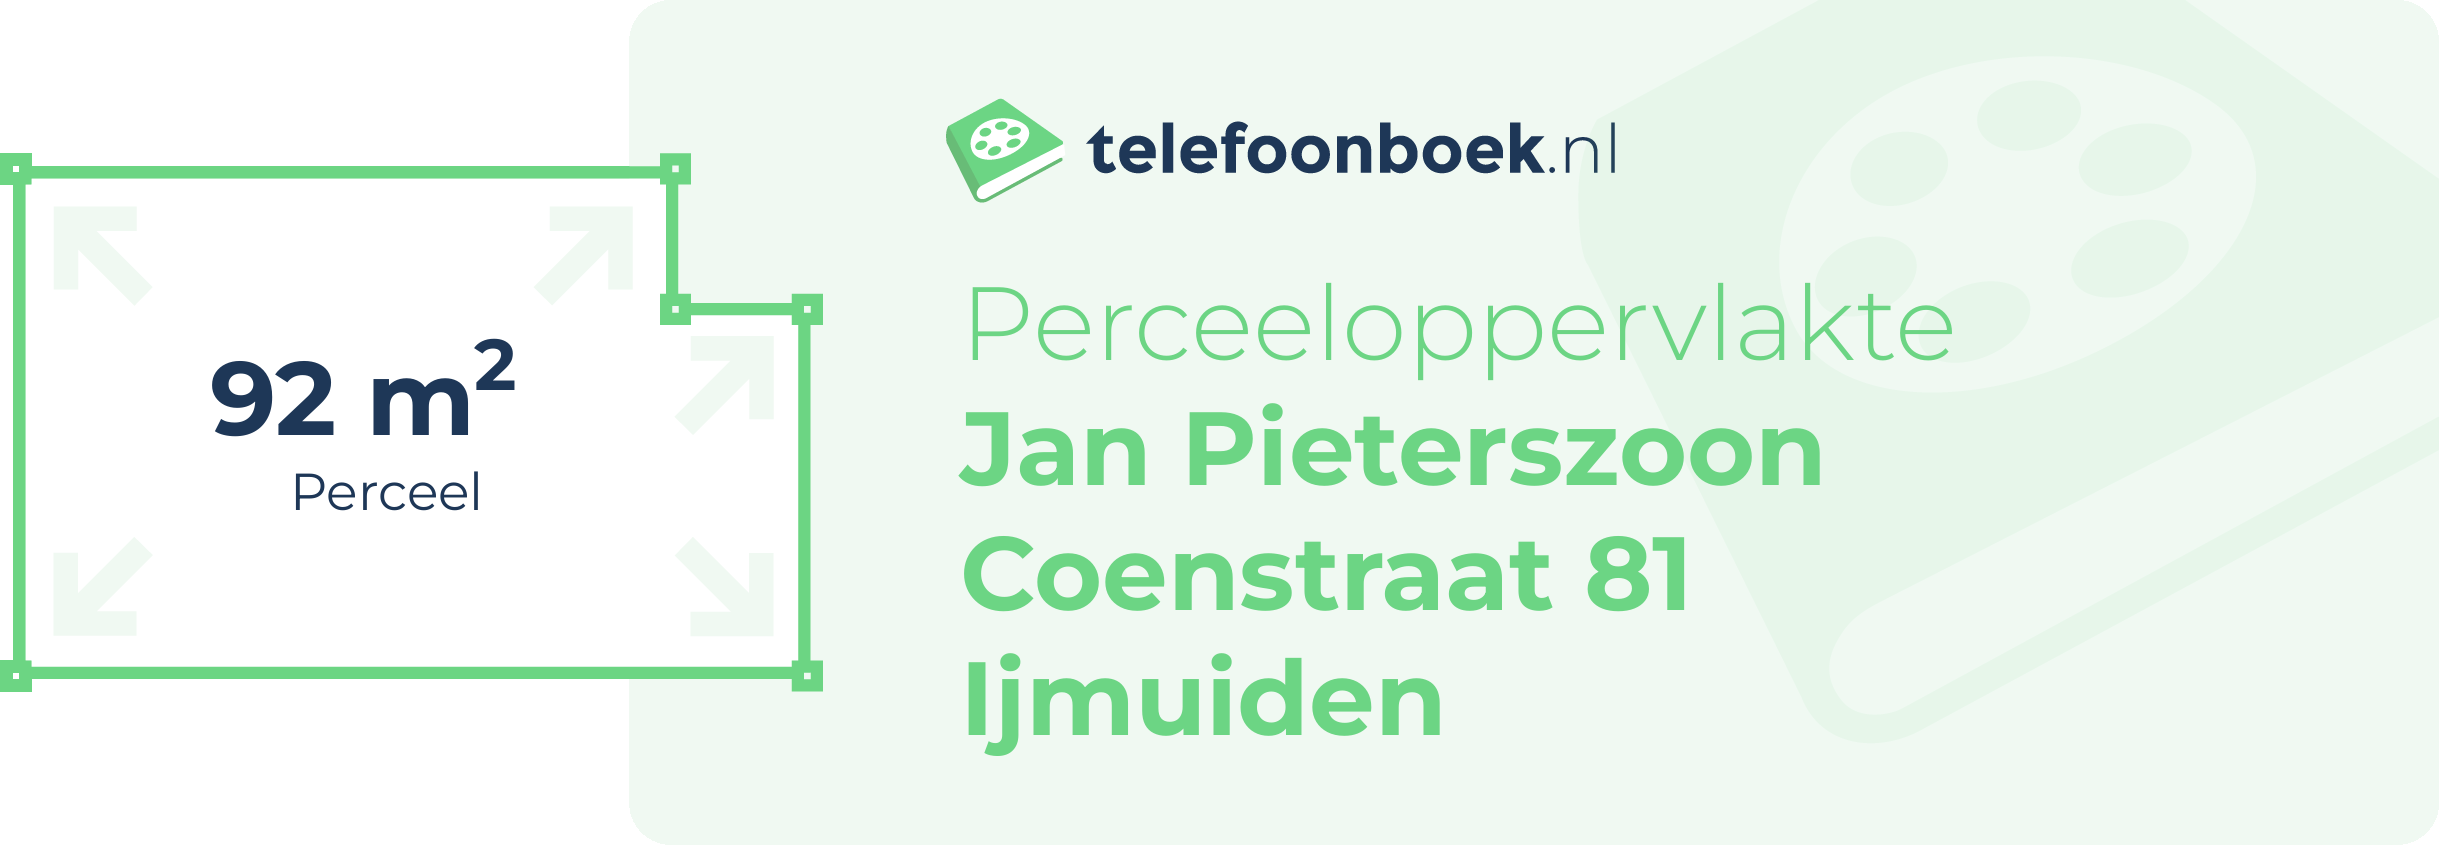 Perceeloppervlakte Jan Pieterszoon Coenstraat 81 Ijmuiden